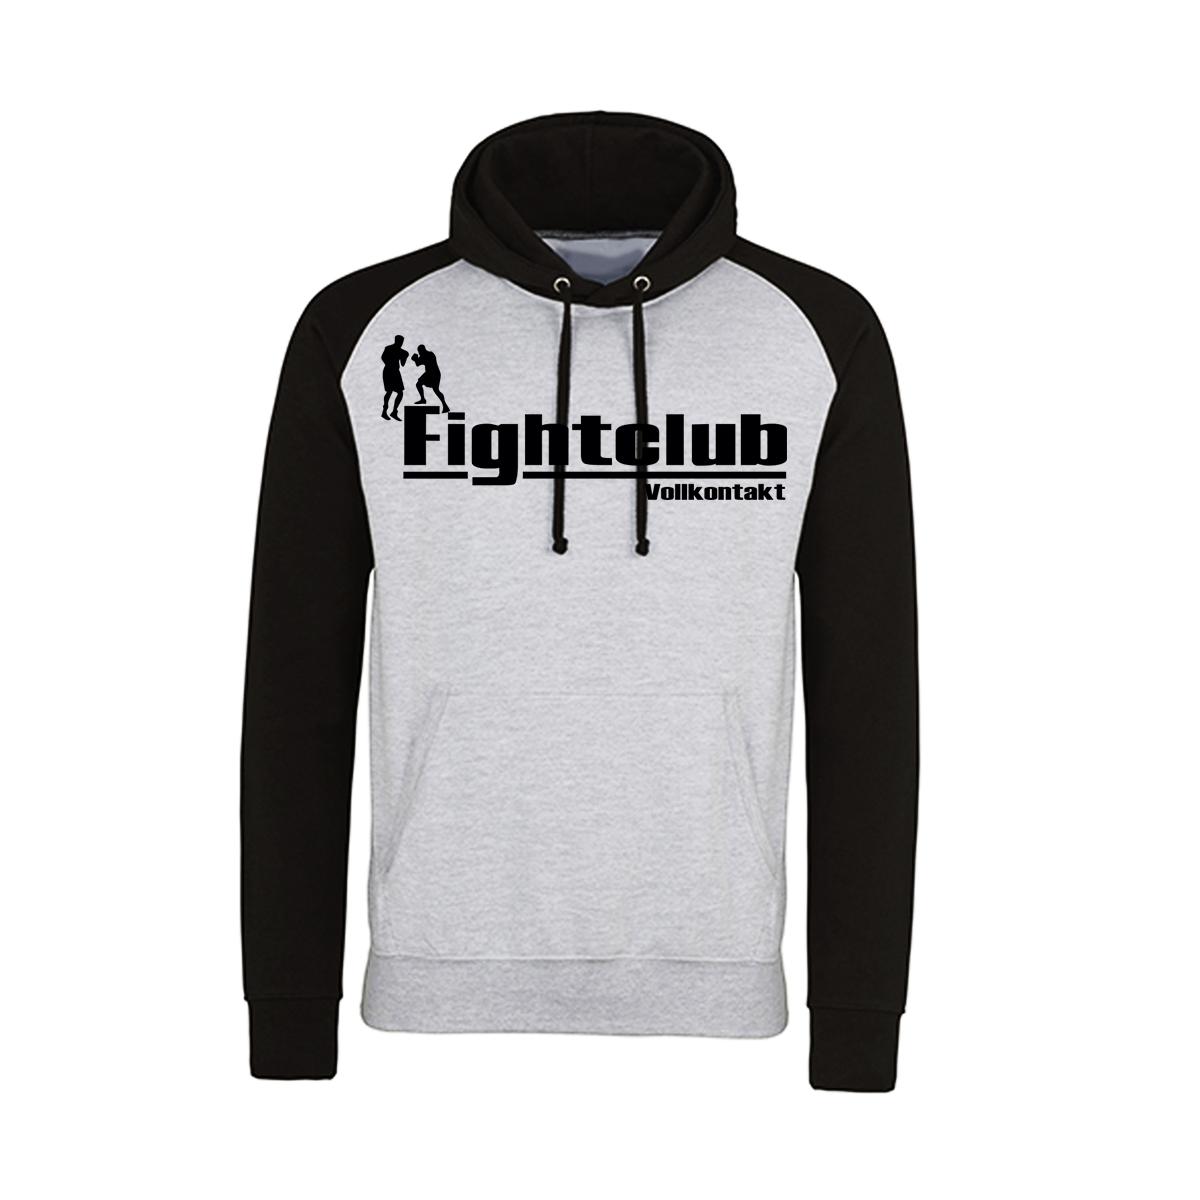 Fight Club - Vollkontakt - Männer Kapuzenpullover - 2tone - schwarz/grau